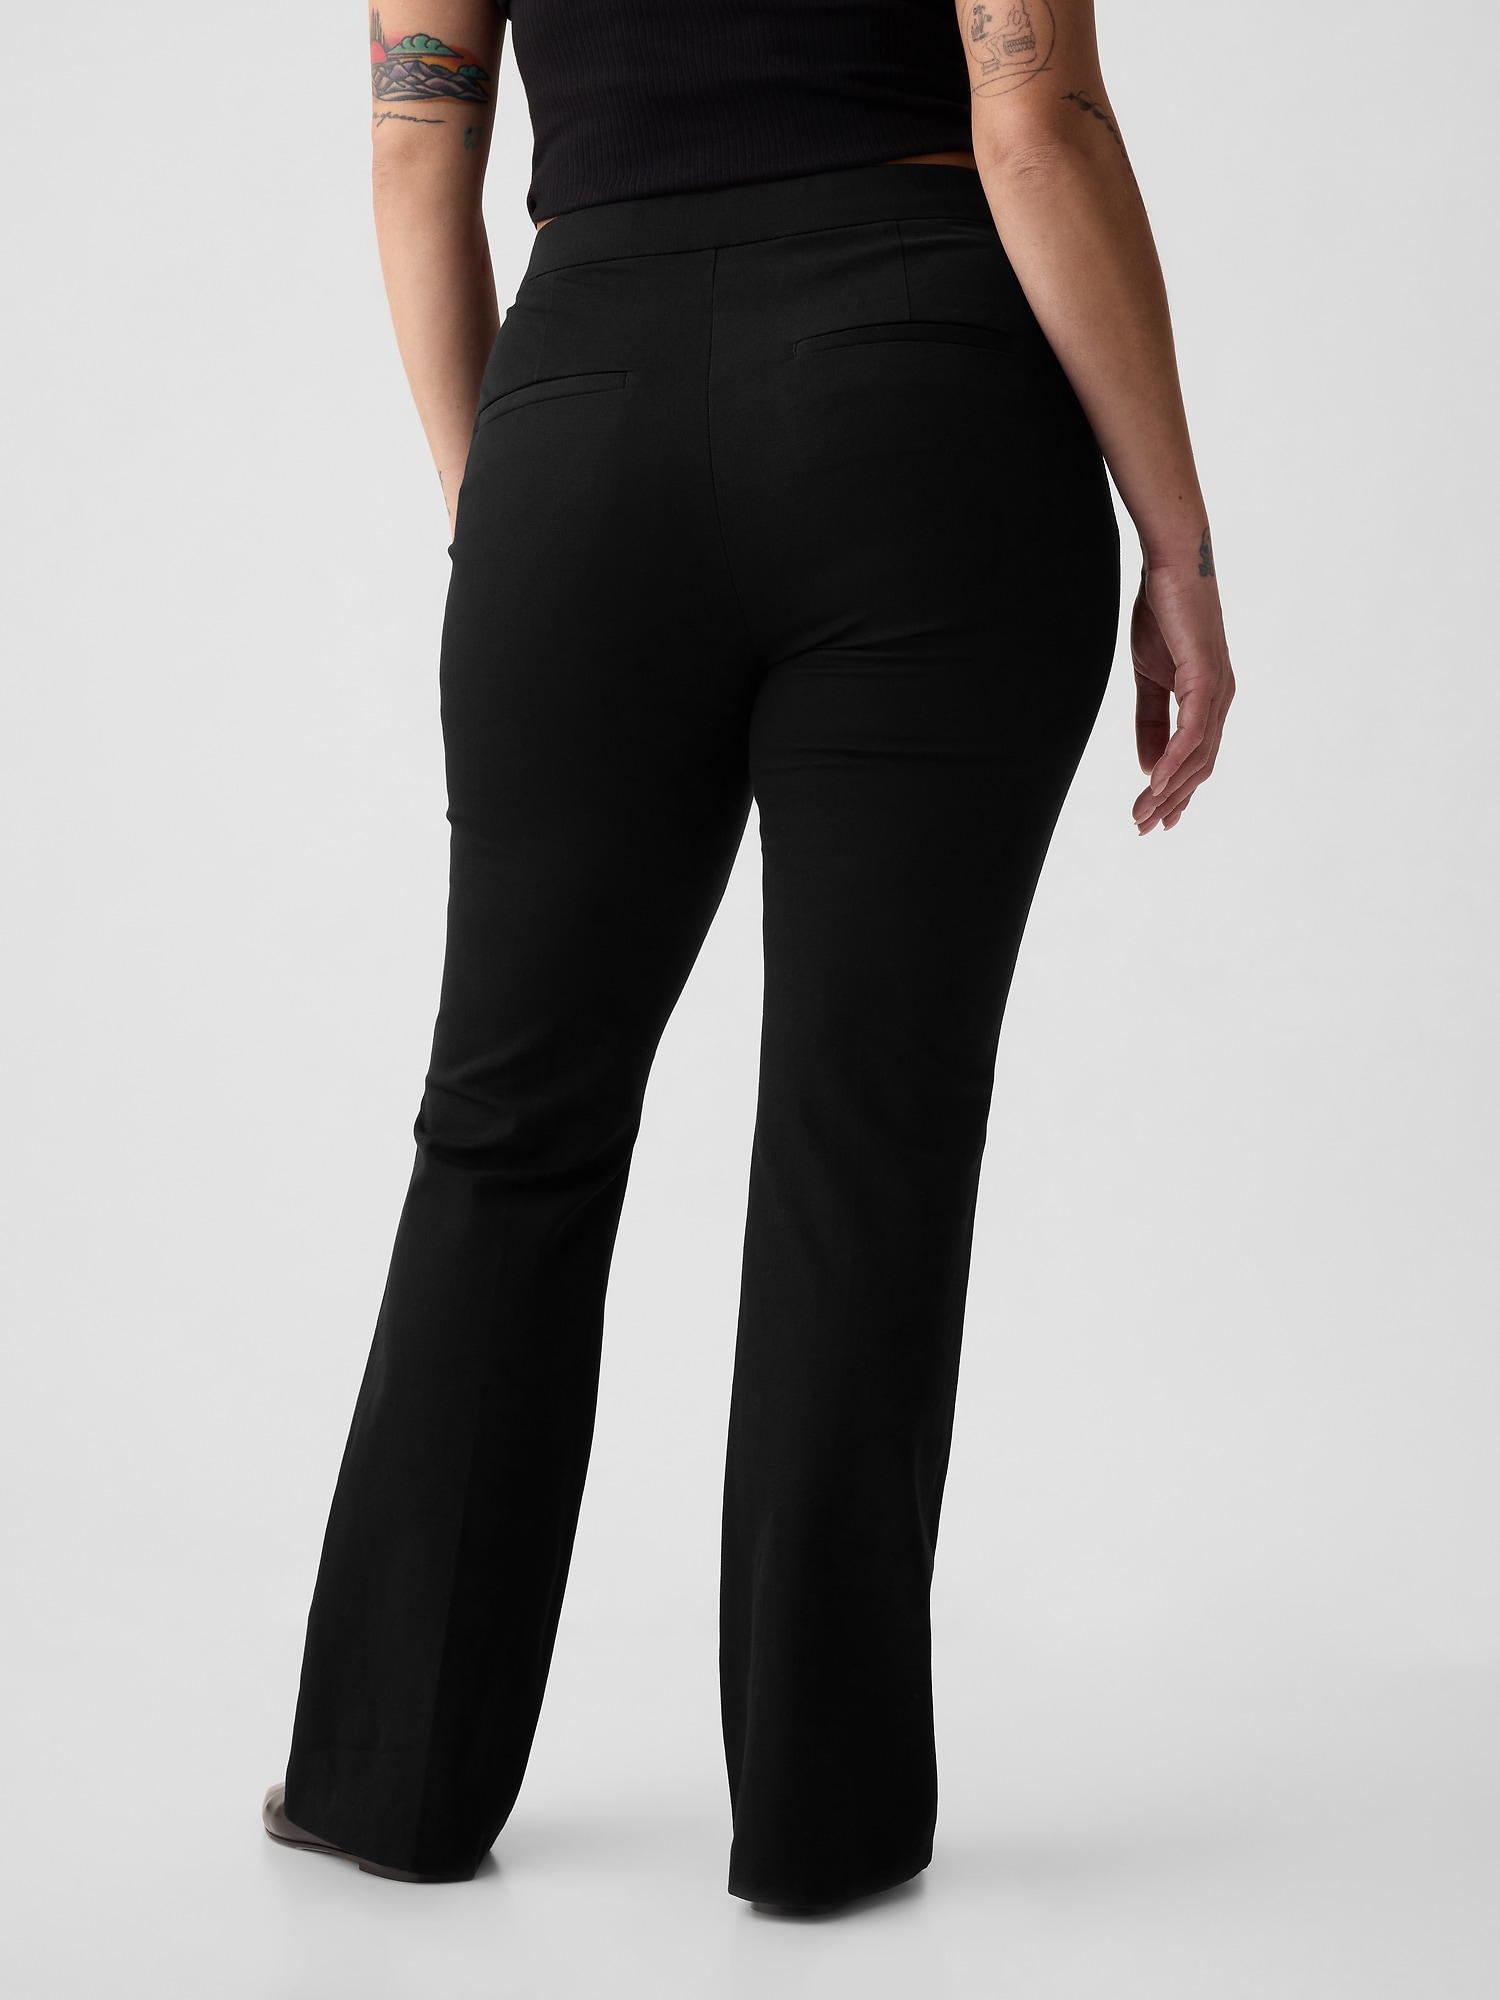 Women's Black Curvy Polyester/ Spandex Blend Pants